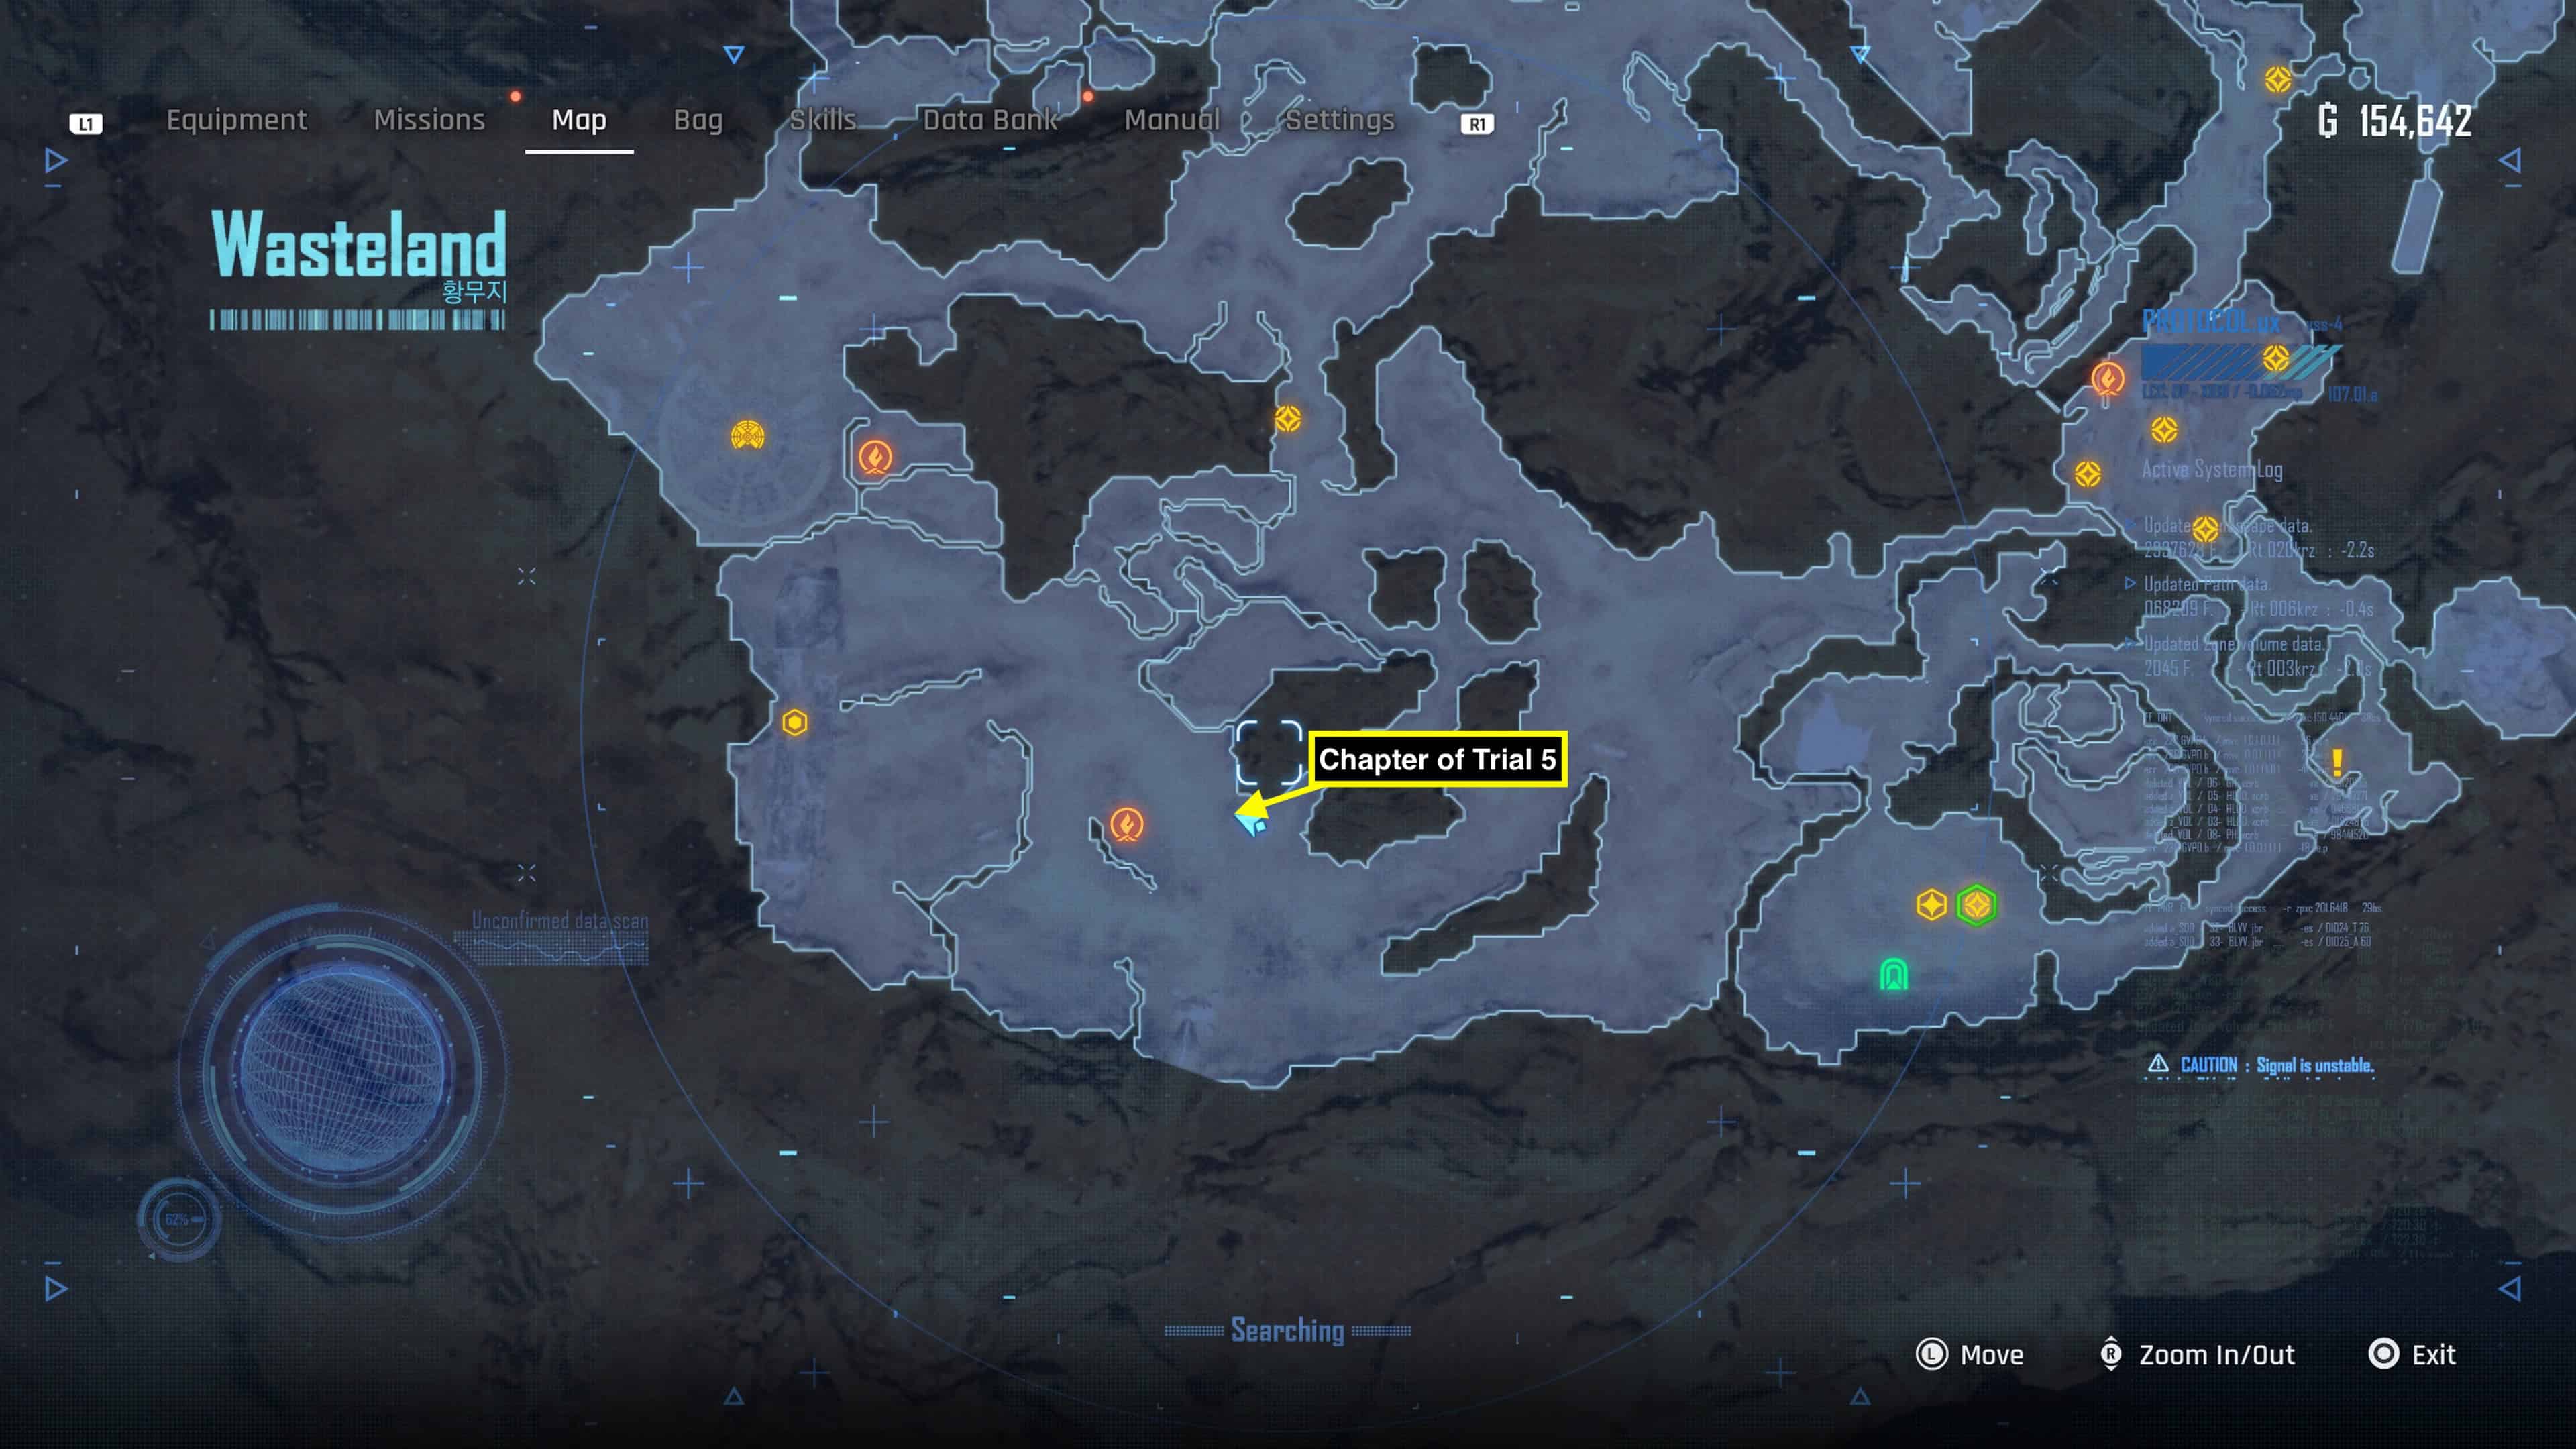 Stellar Blade prayer shrine locations - in-game map showing the wasteland